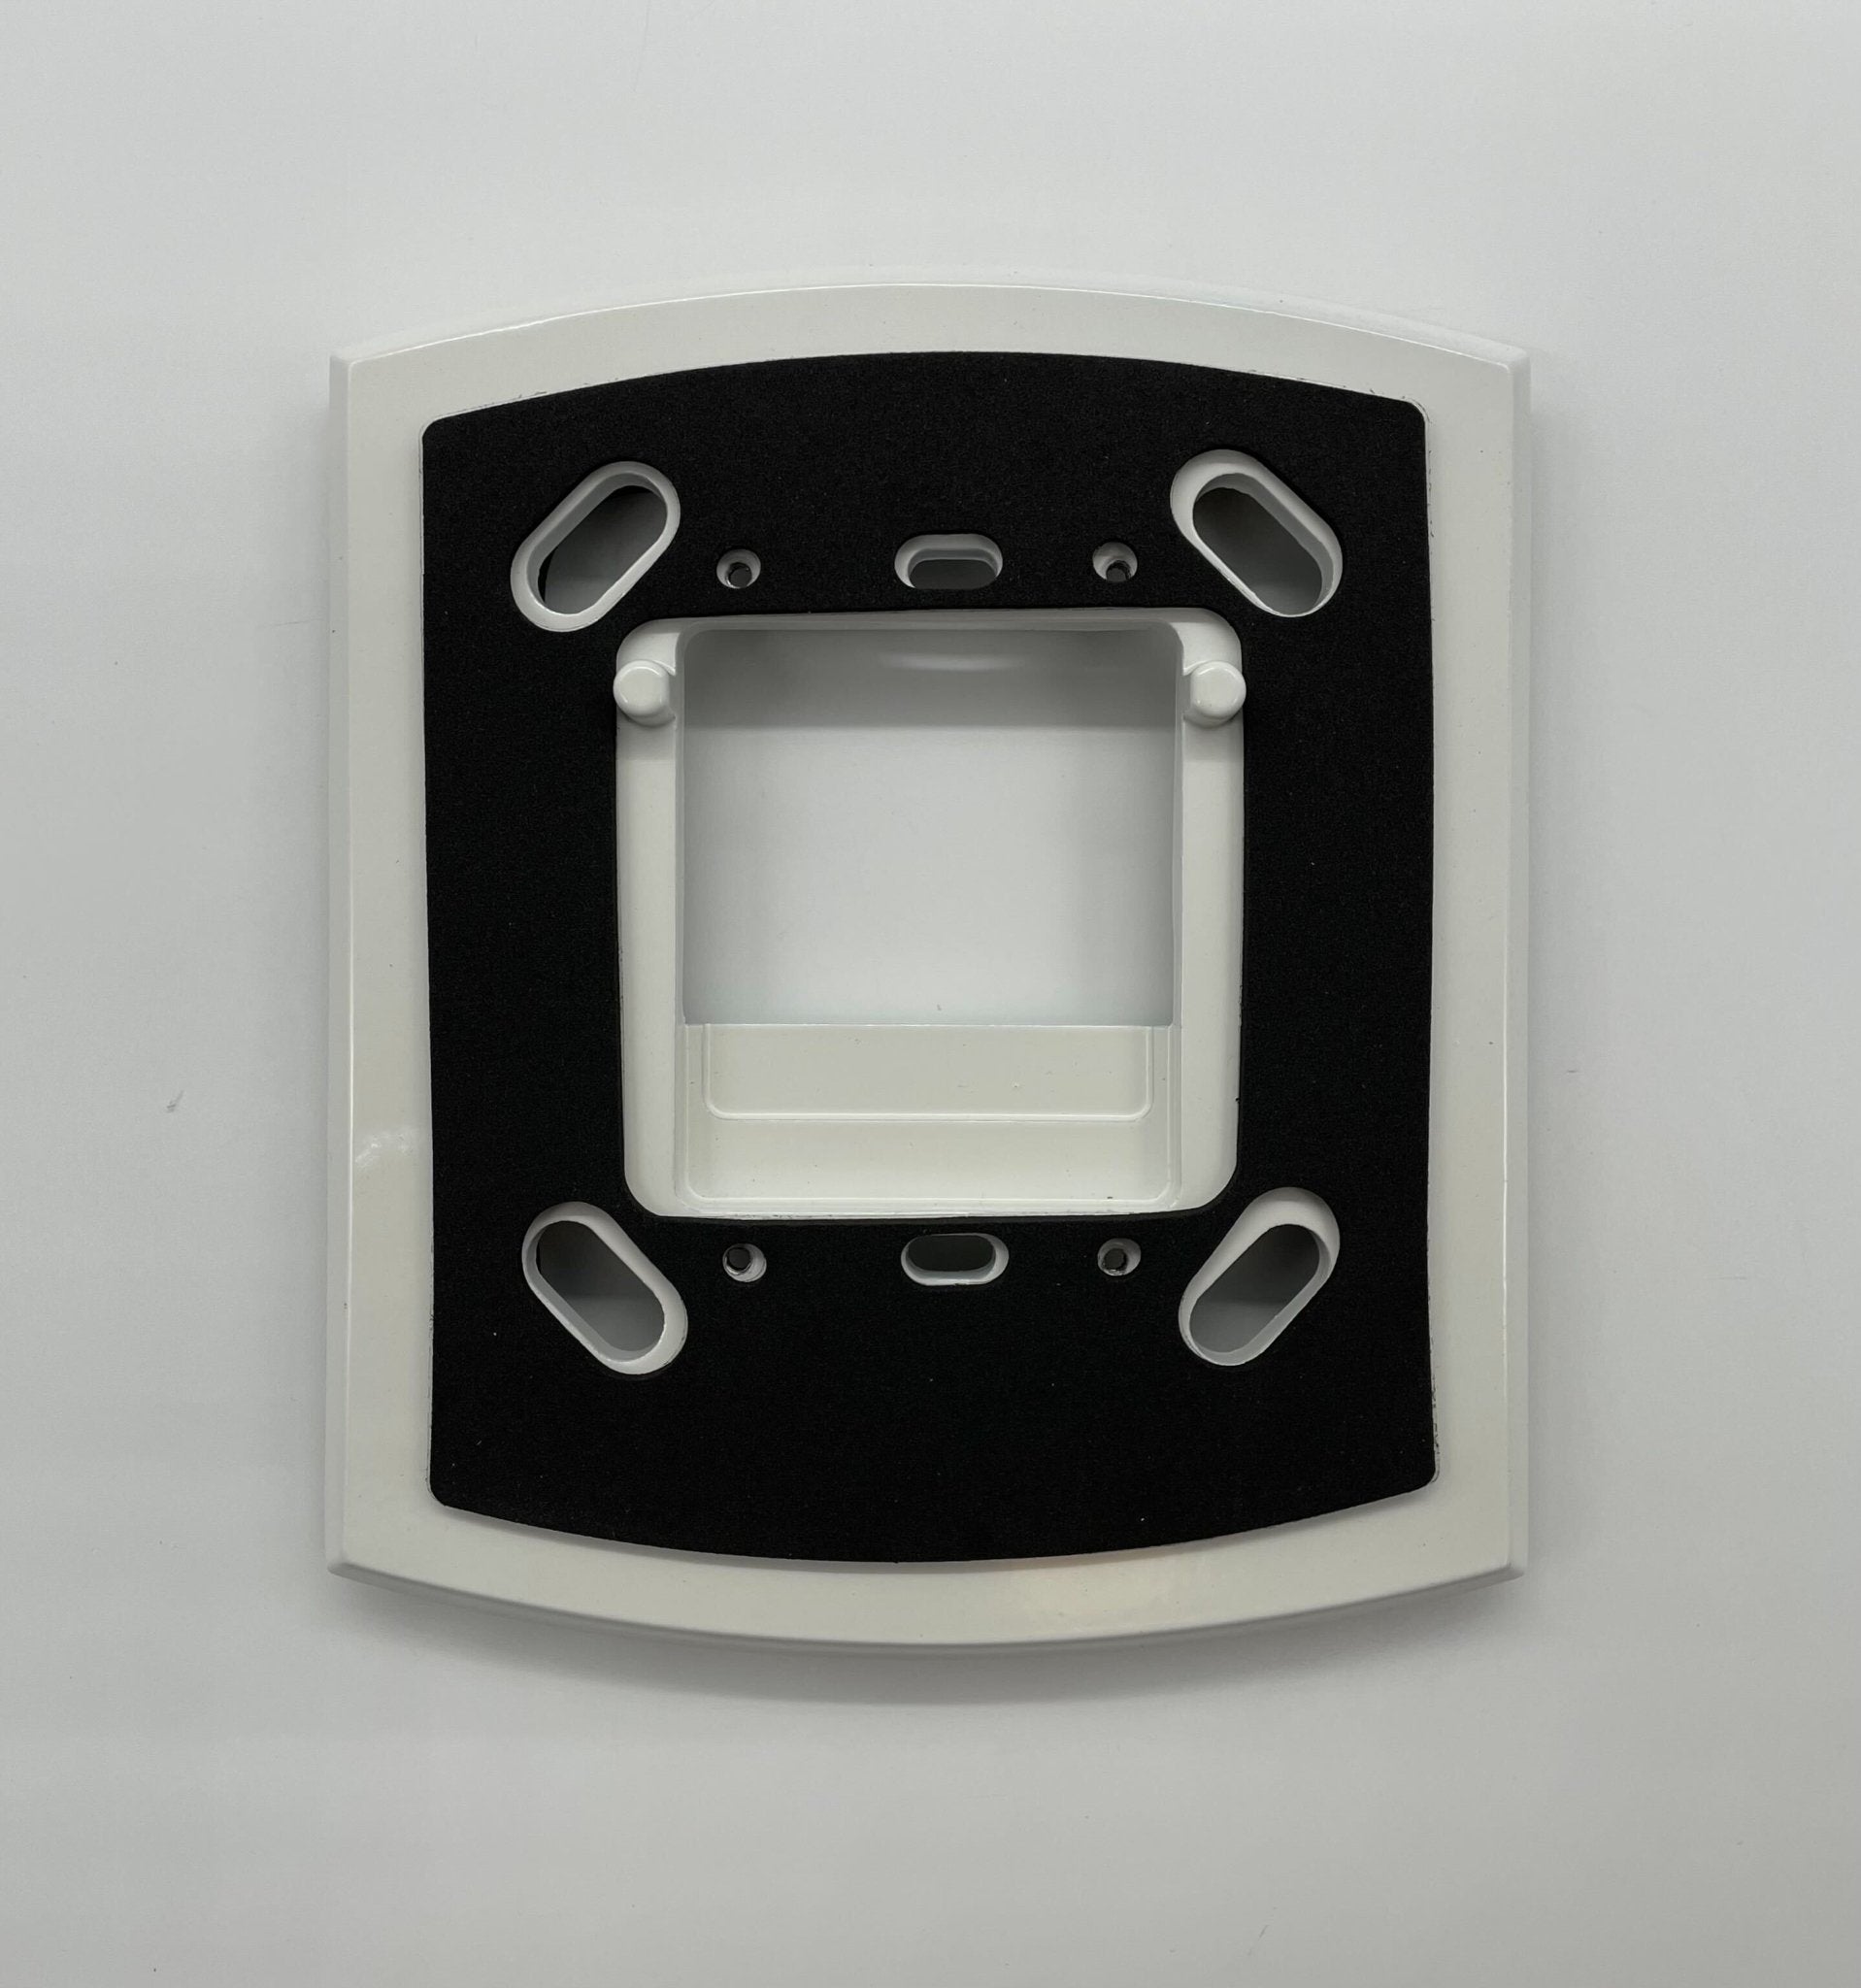 System Sensor WTPW Weatherproof Plate - The Fire Alarm Supplier